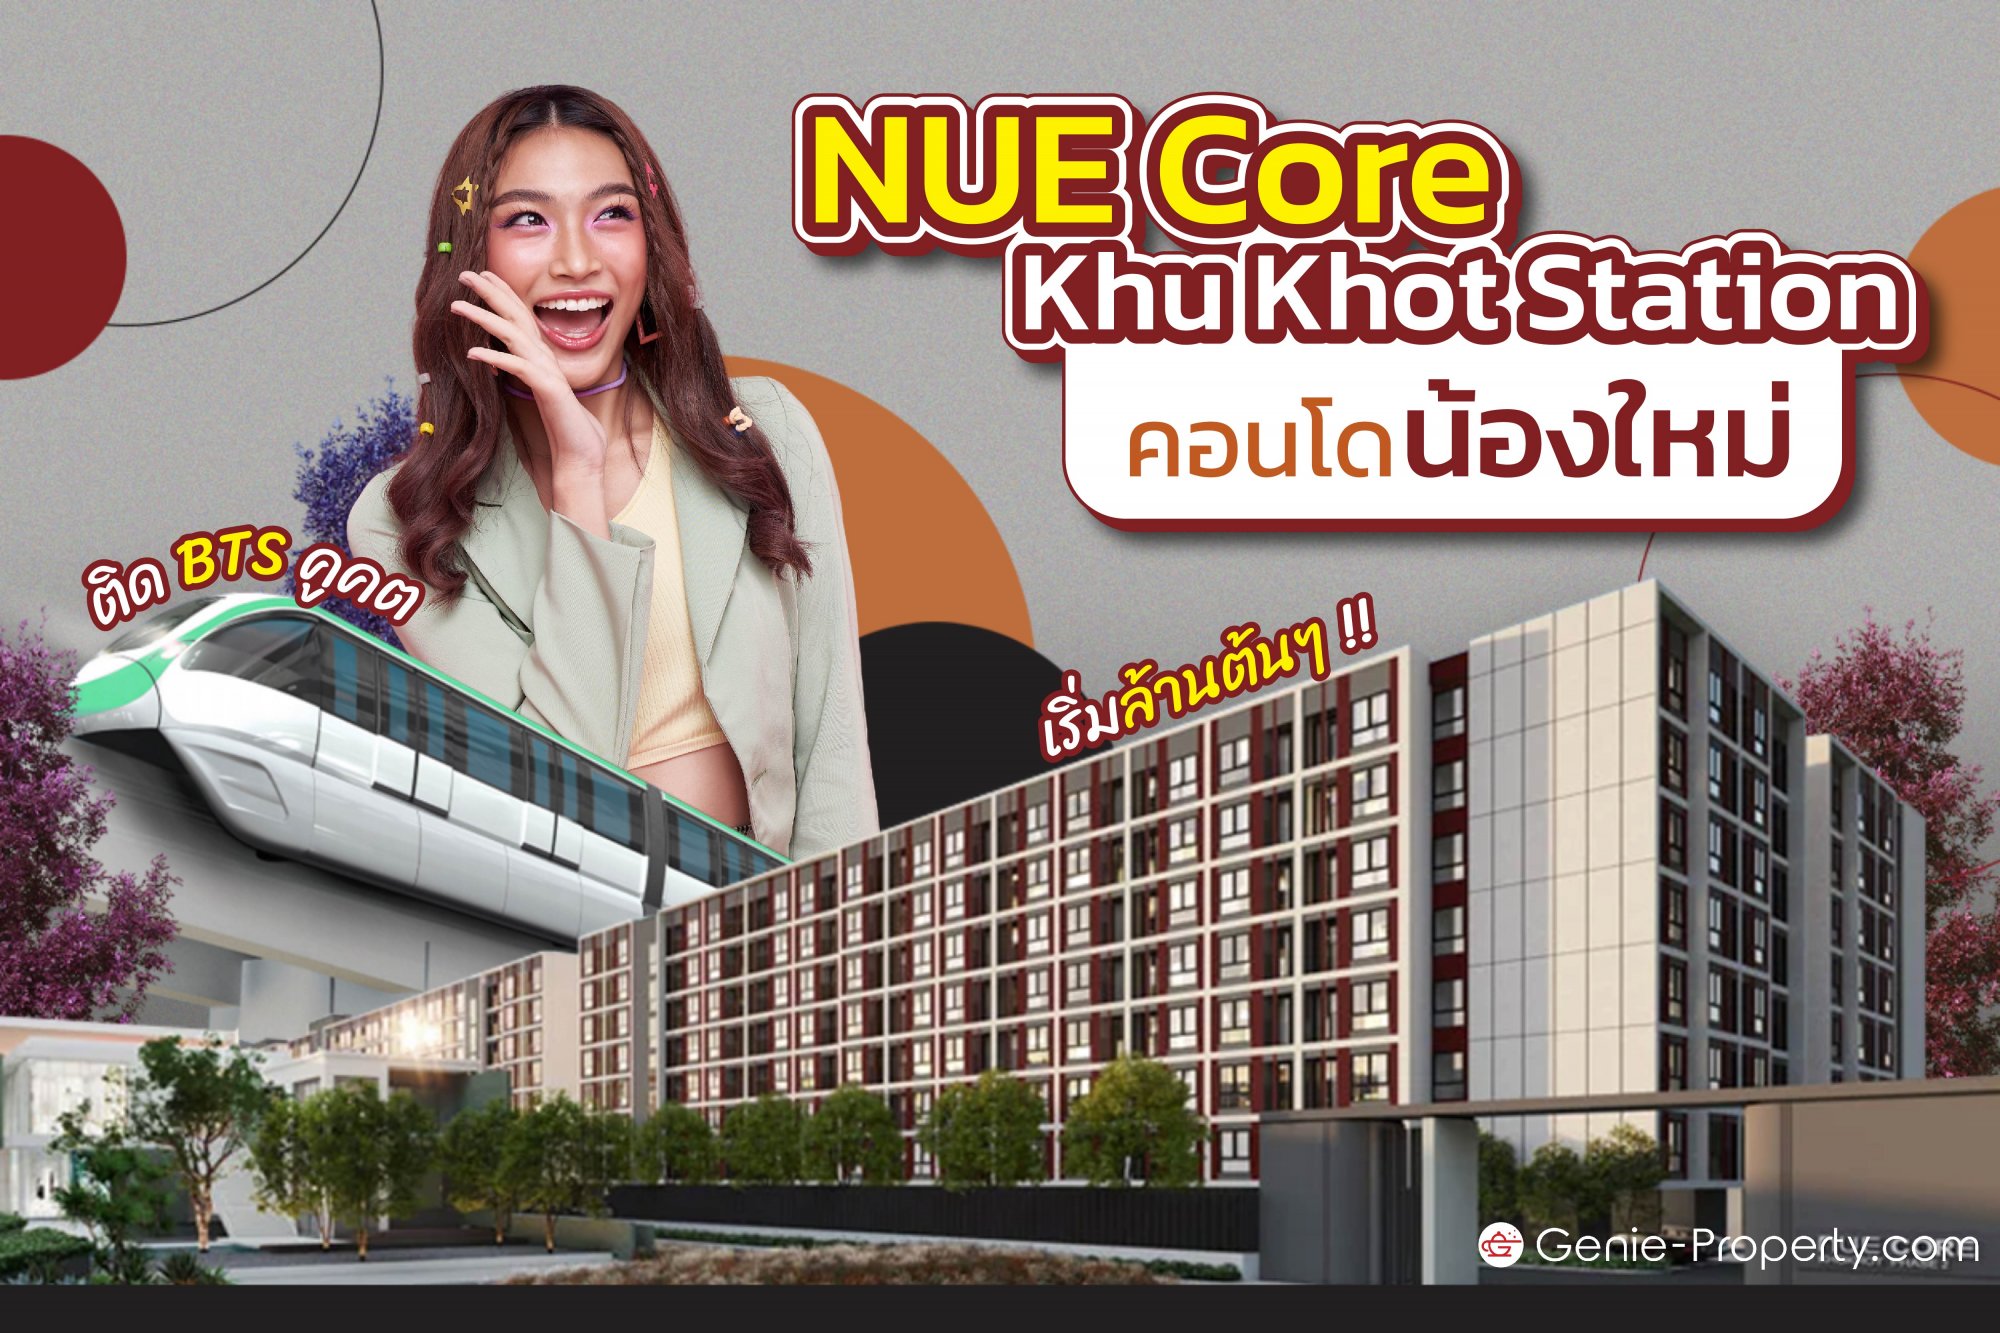 image for NUE Core Khu Khot Station คอนโดน้องใหม่ ติด BTS คูคต เริ่มล้านต้นๆ !!